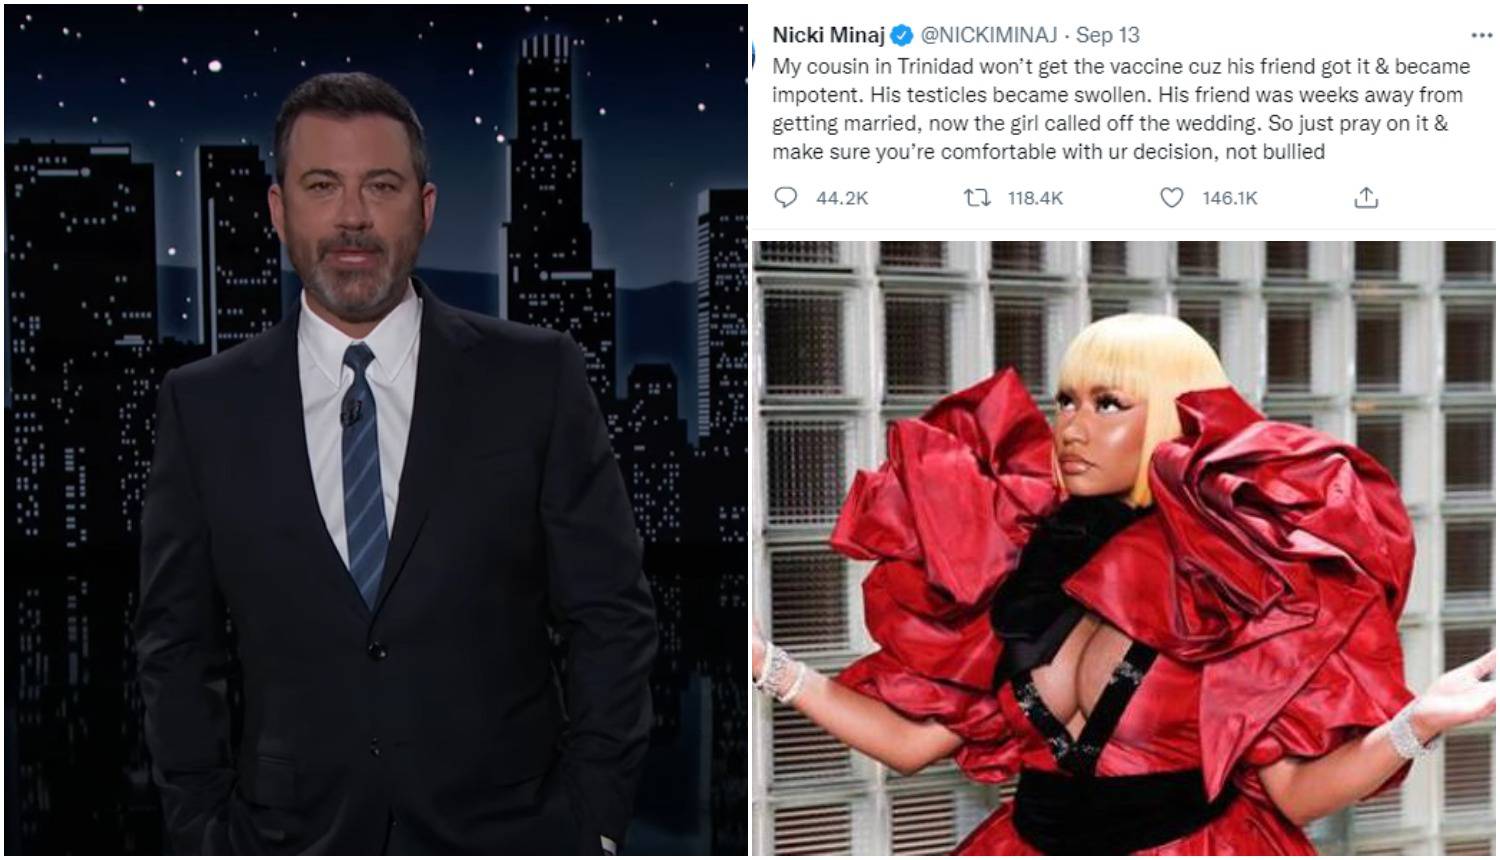 Fanovi Nicki Minaj sad su protiv cijepljenja, a Jimmy Kimmel želi intervju zbog 'oteknutih testisa'